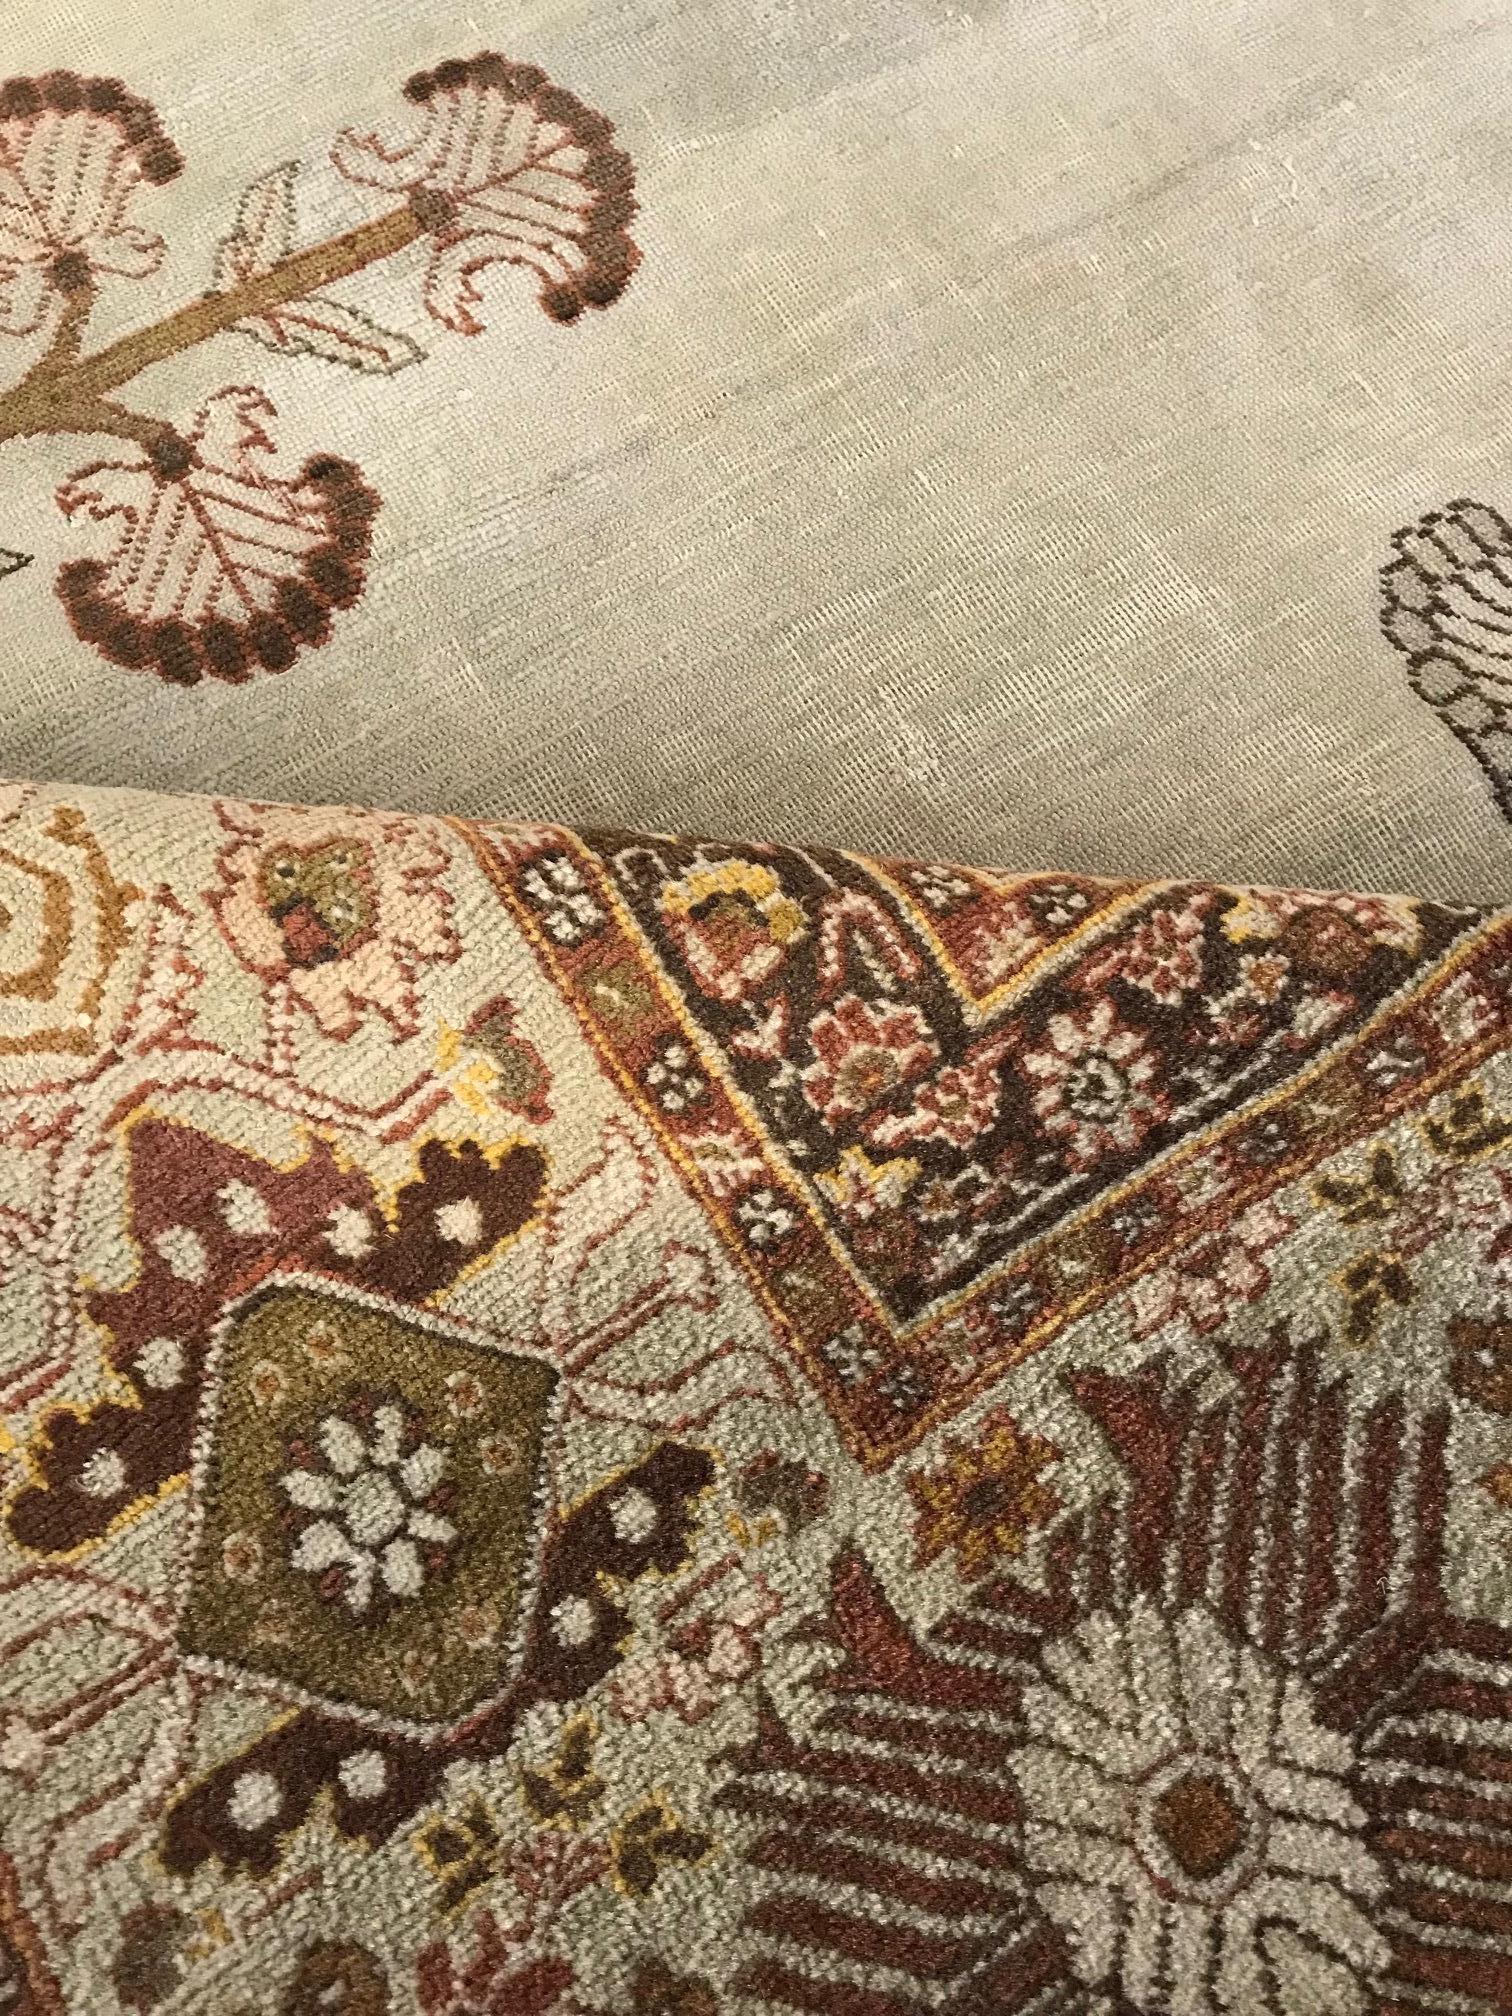 Antique Persian Tabriz handmade wool rug
Size: 9'0